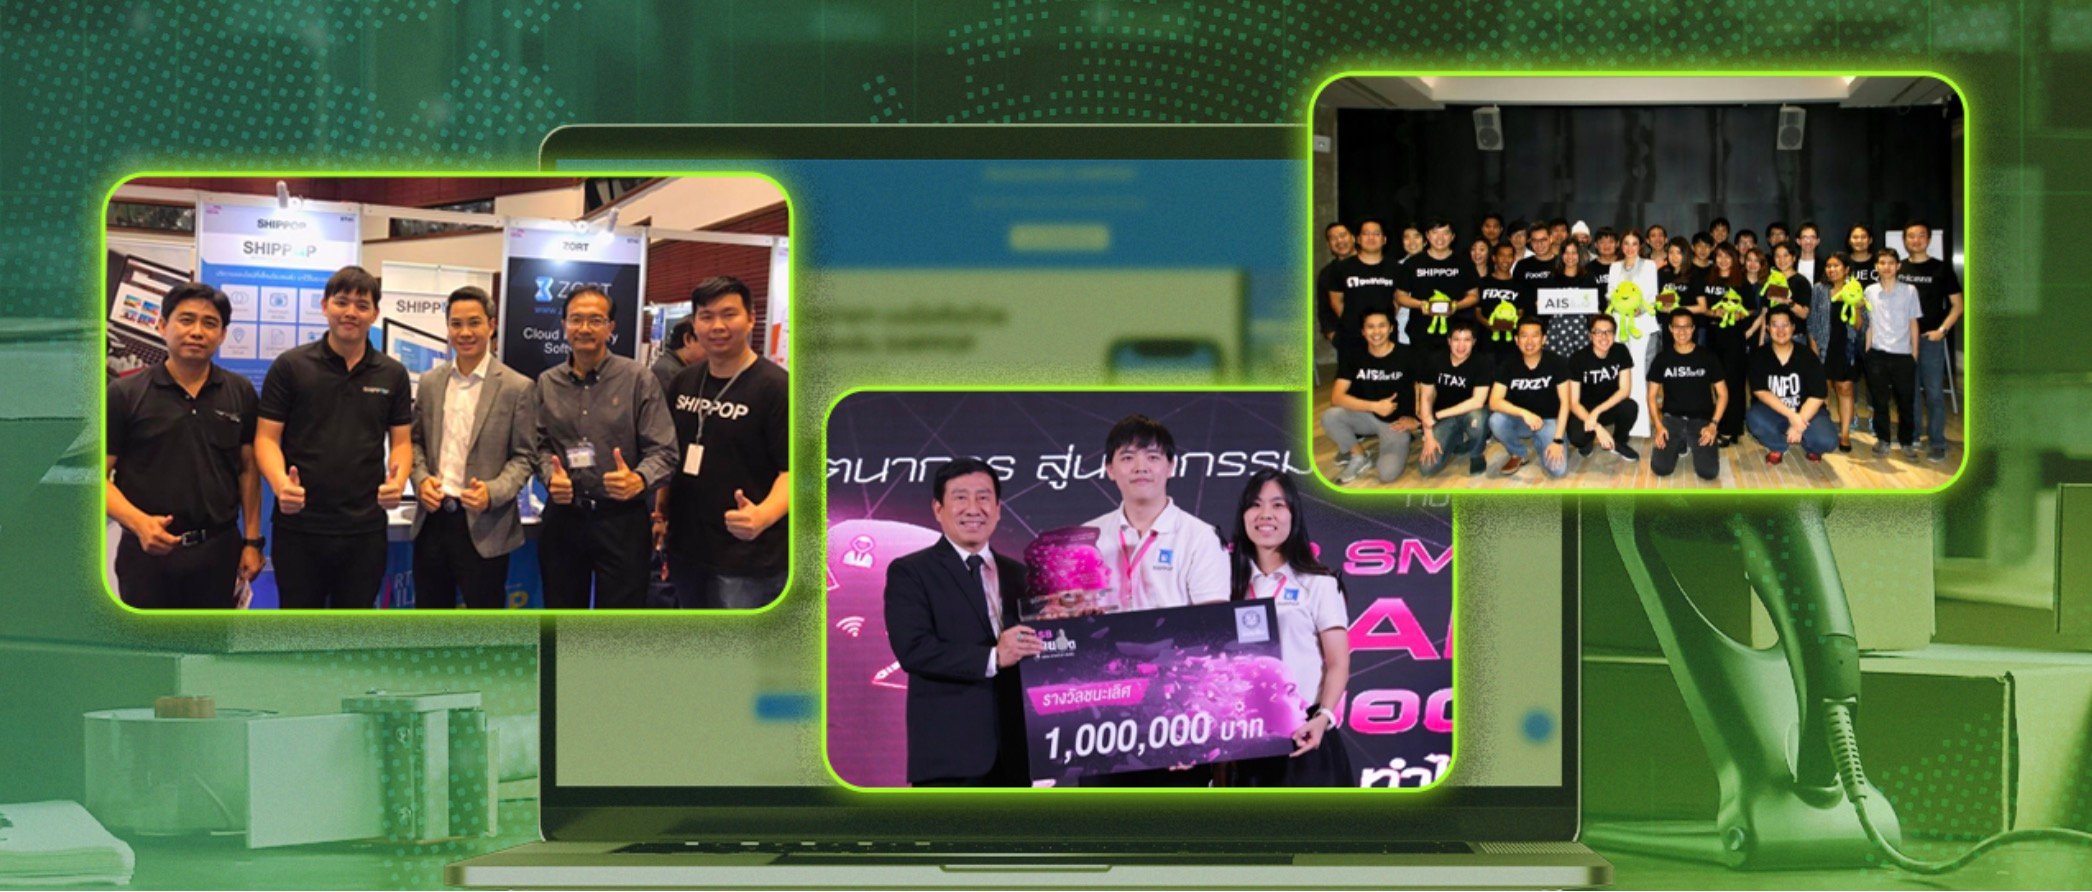 SHIPPOP รับรางวัลมากมาย - Startup Thailand Focus